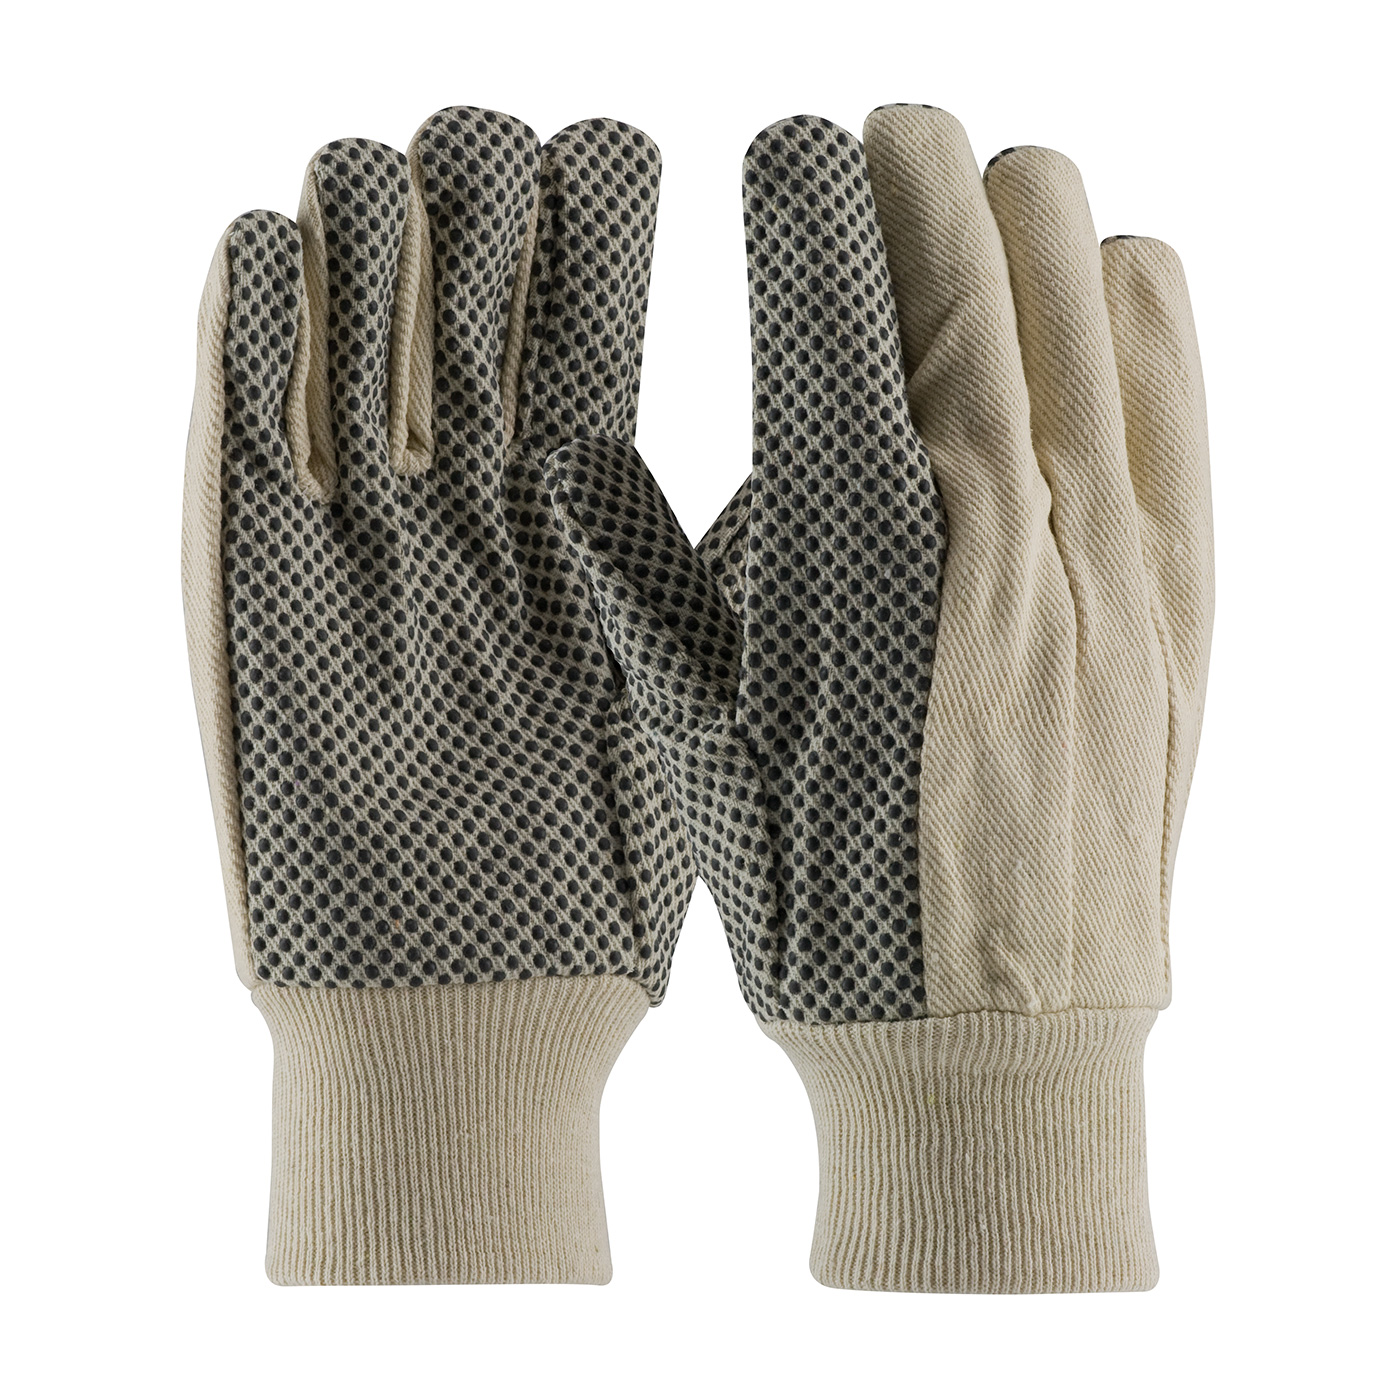 PIP Men's Premium Grade Natural 8 oz. PVC Dot Grip Cotton Canvas Gloves